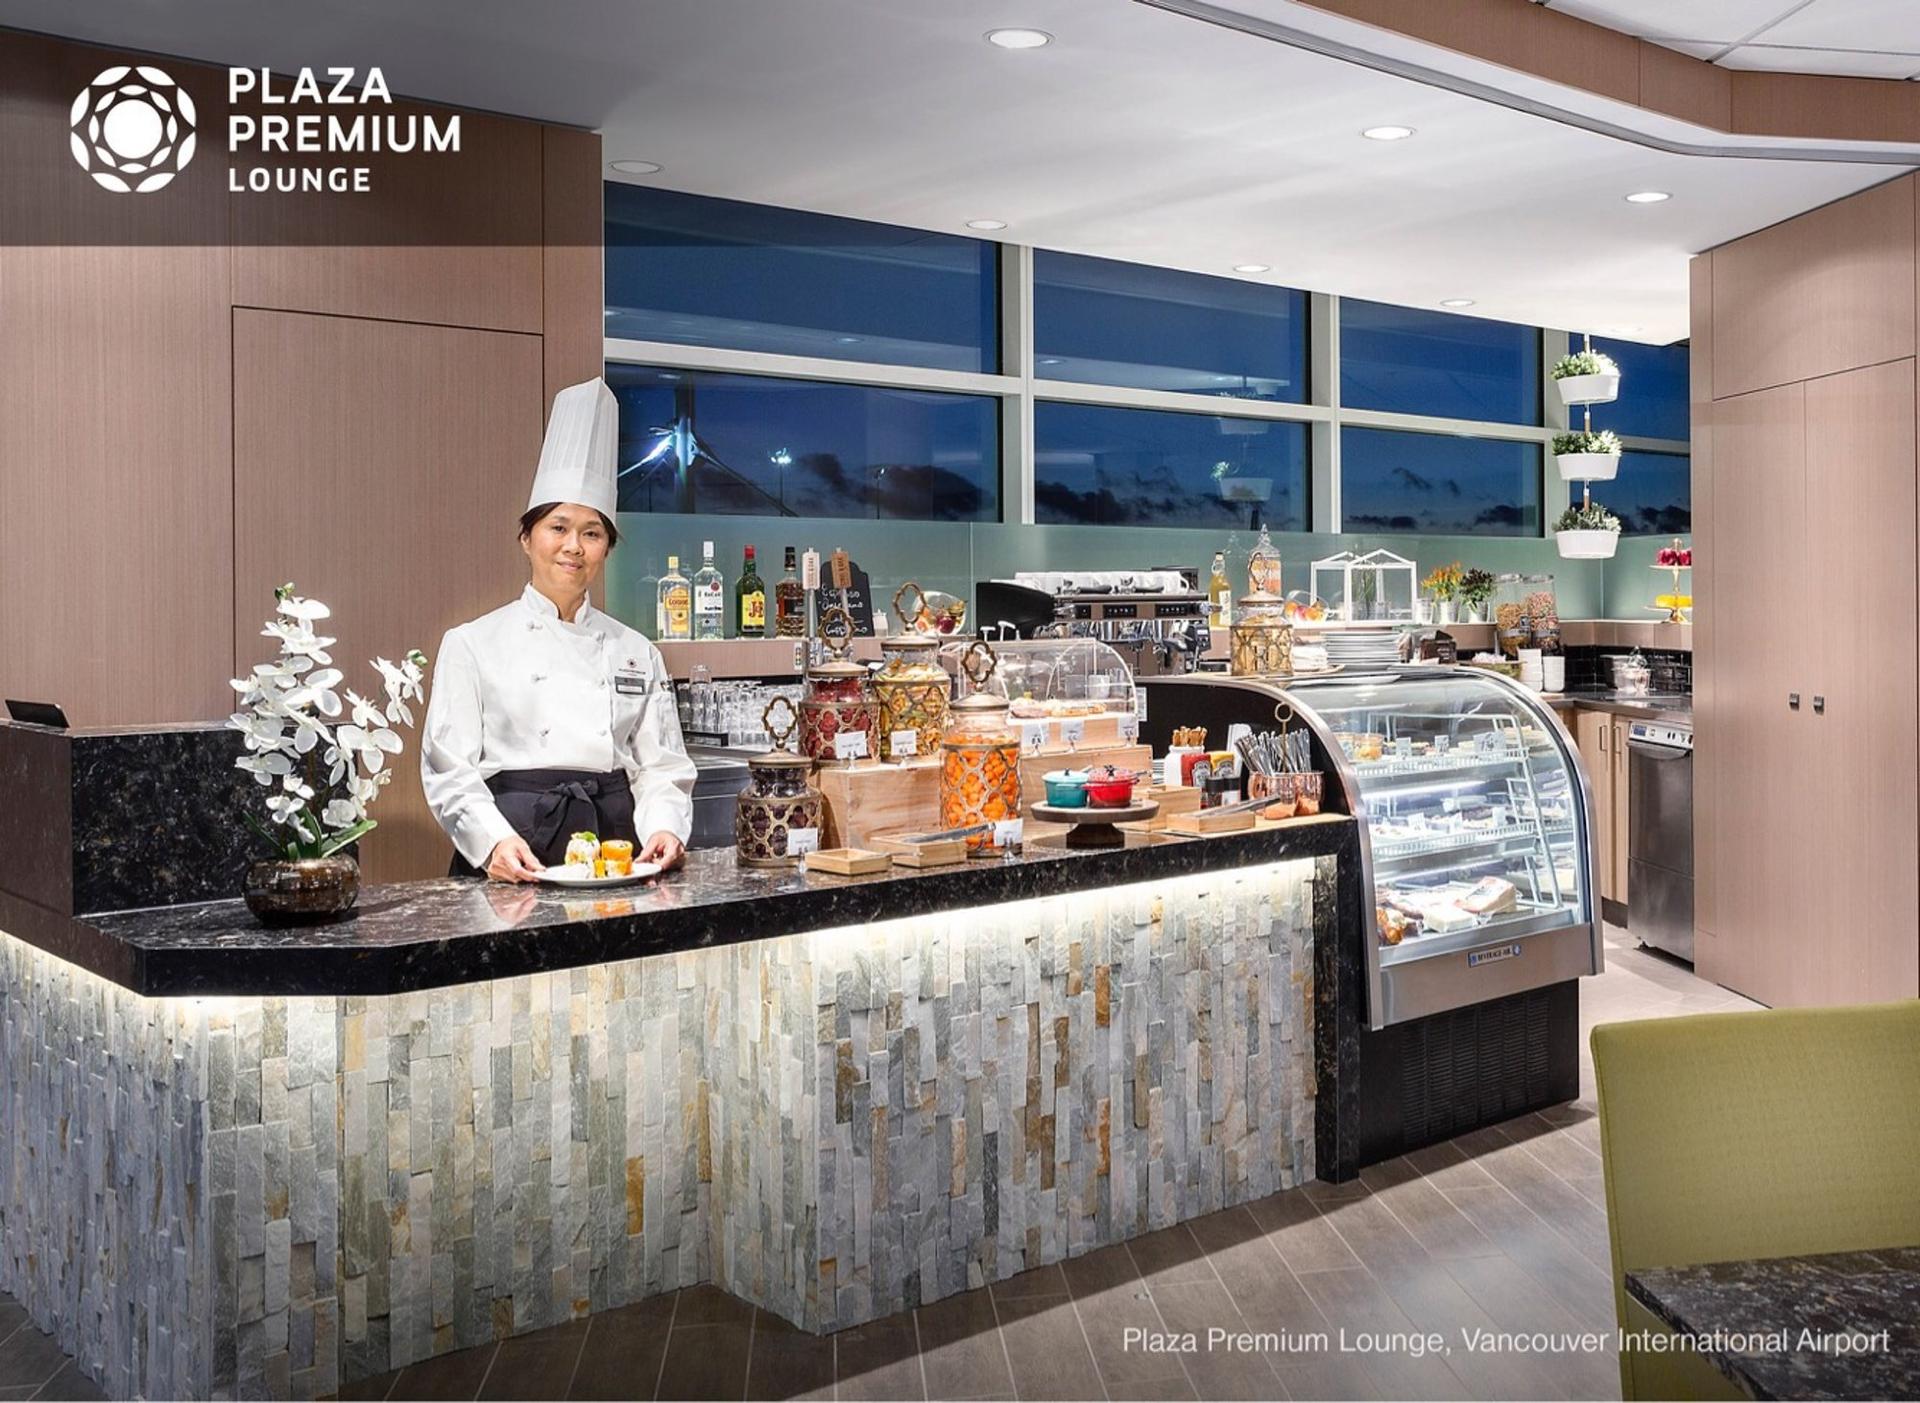 Plaza Premium Lounge (Domestic Gate C29) image 7 of 17